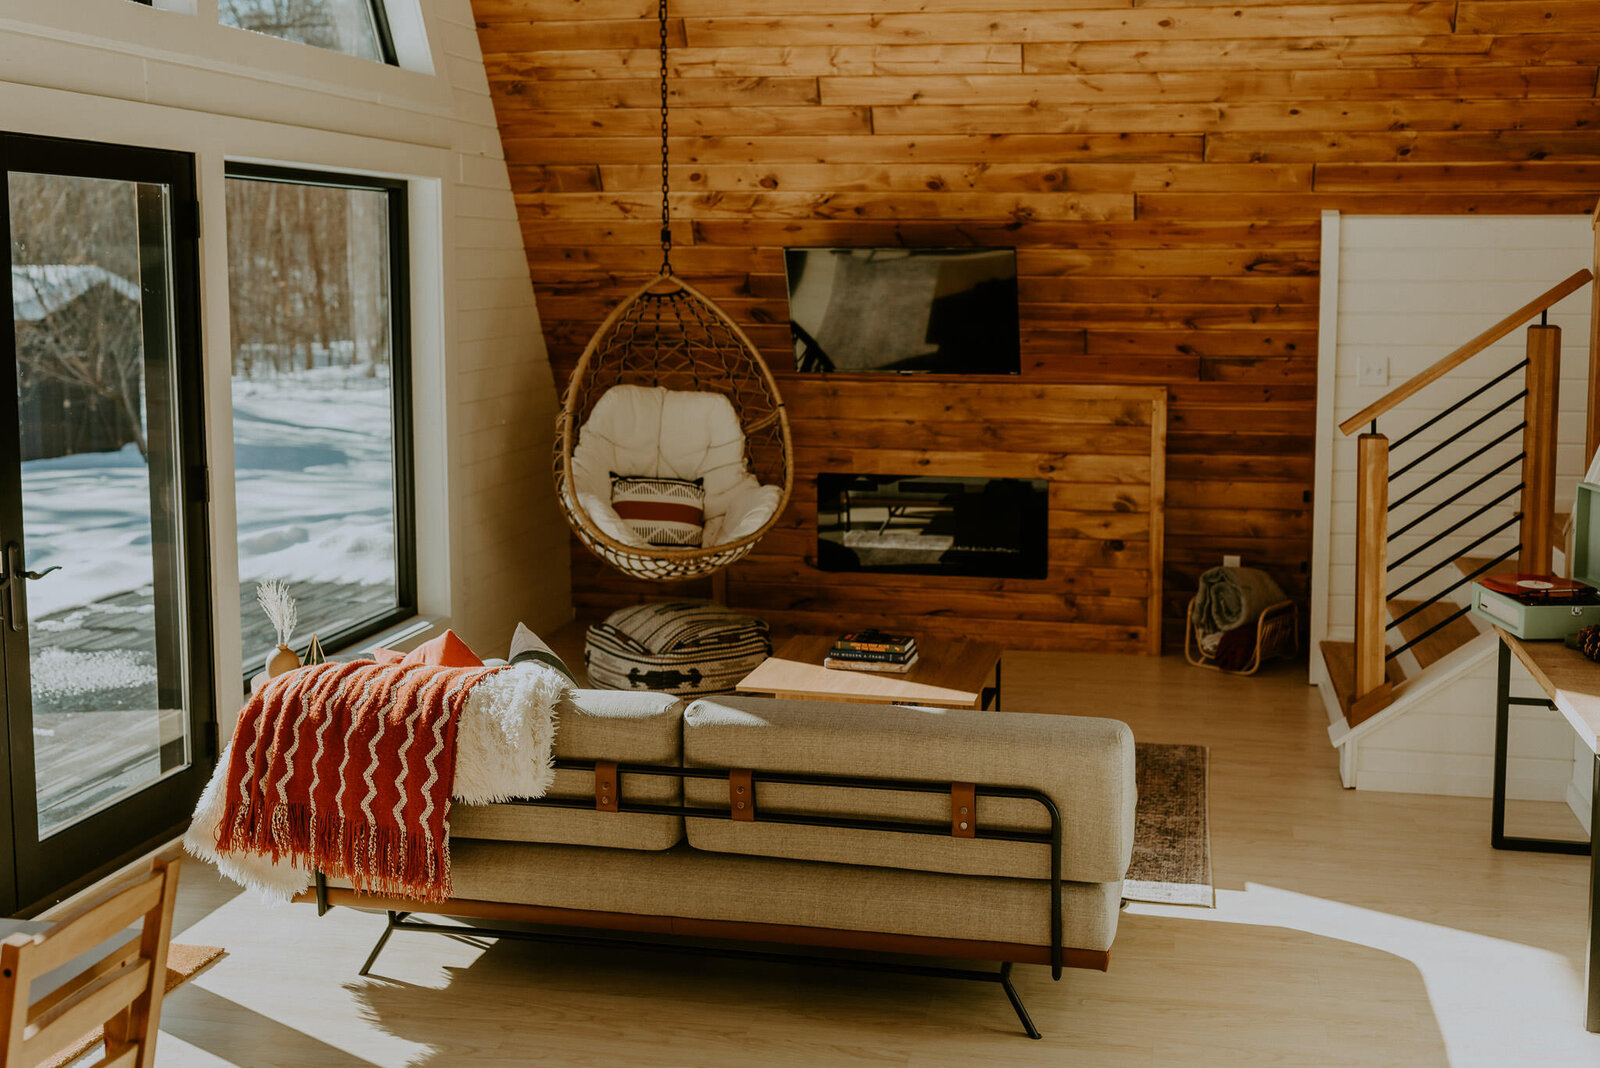 hilhaus-aframe-airbnb-winter-minnesota-00103